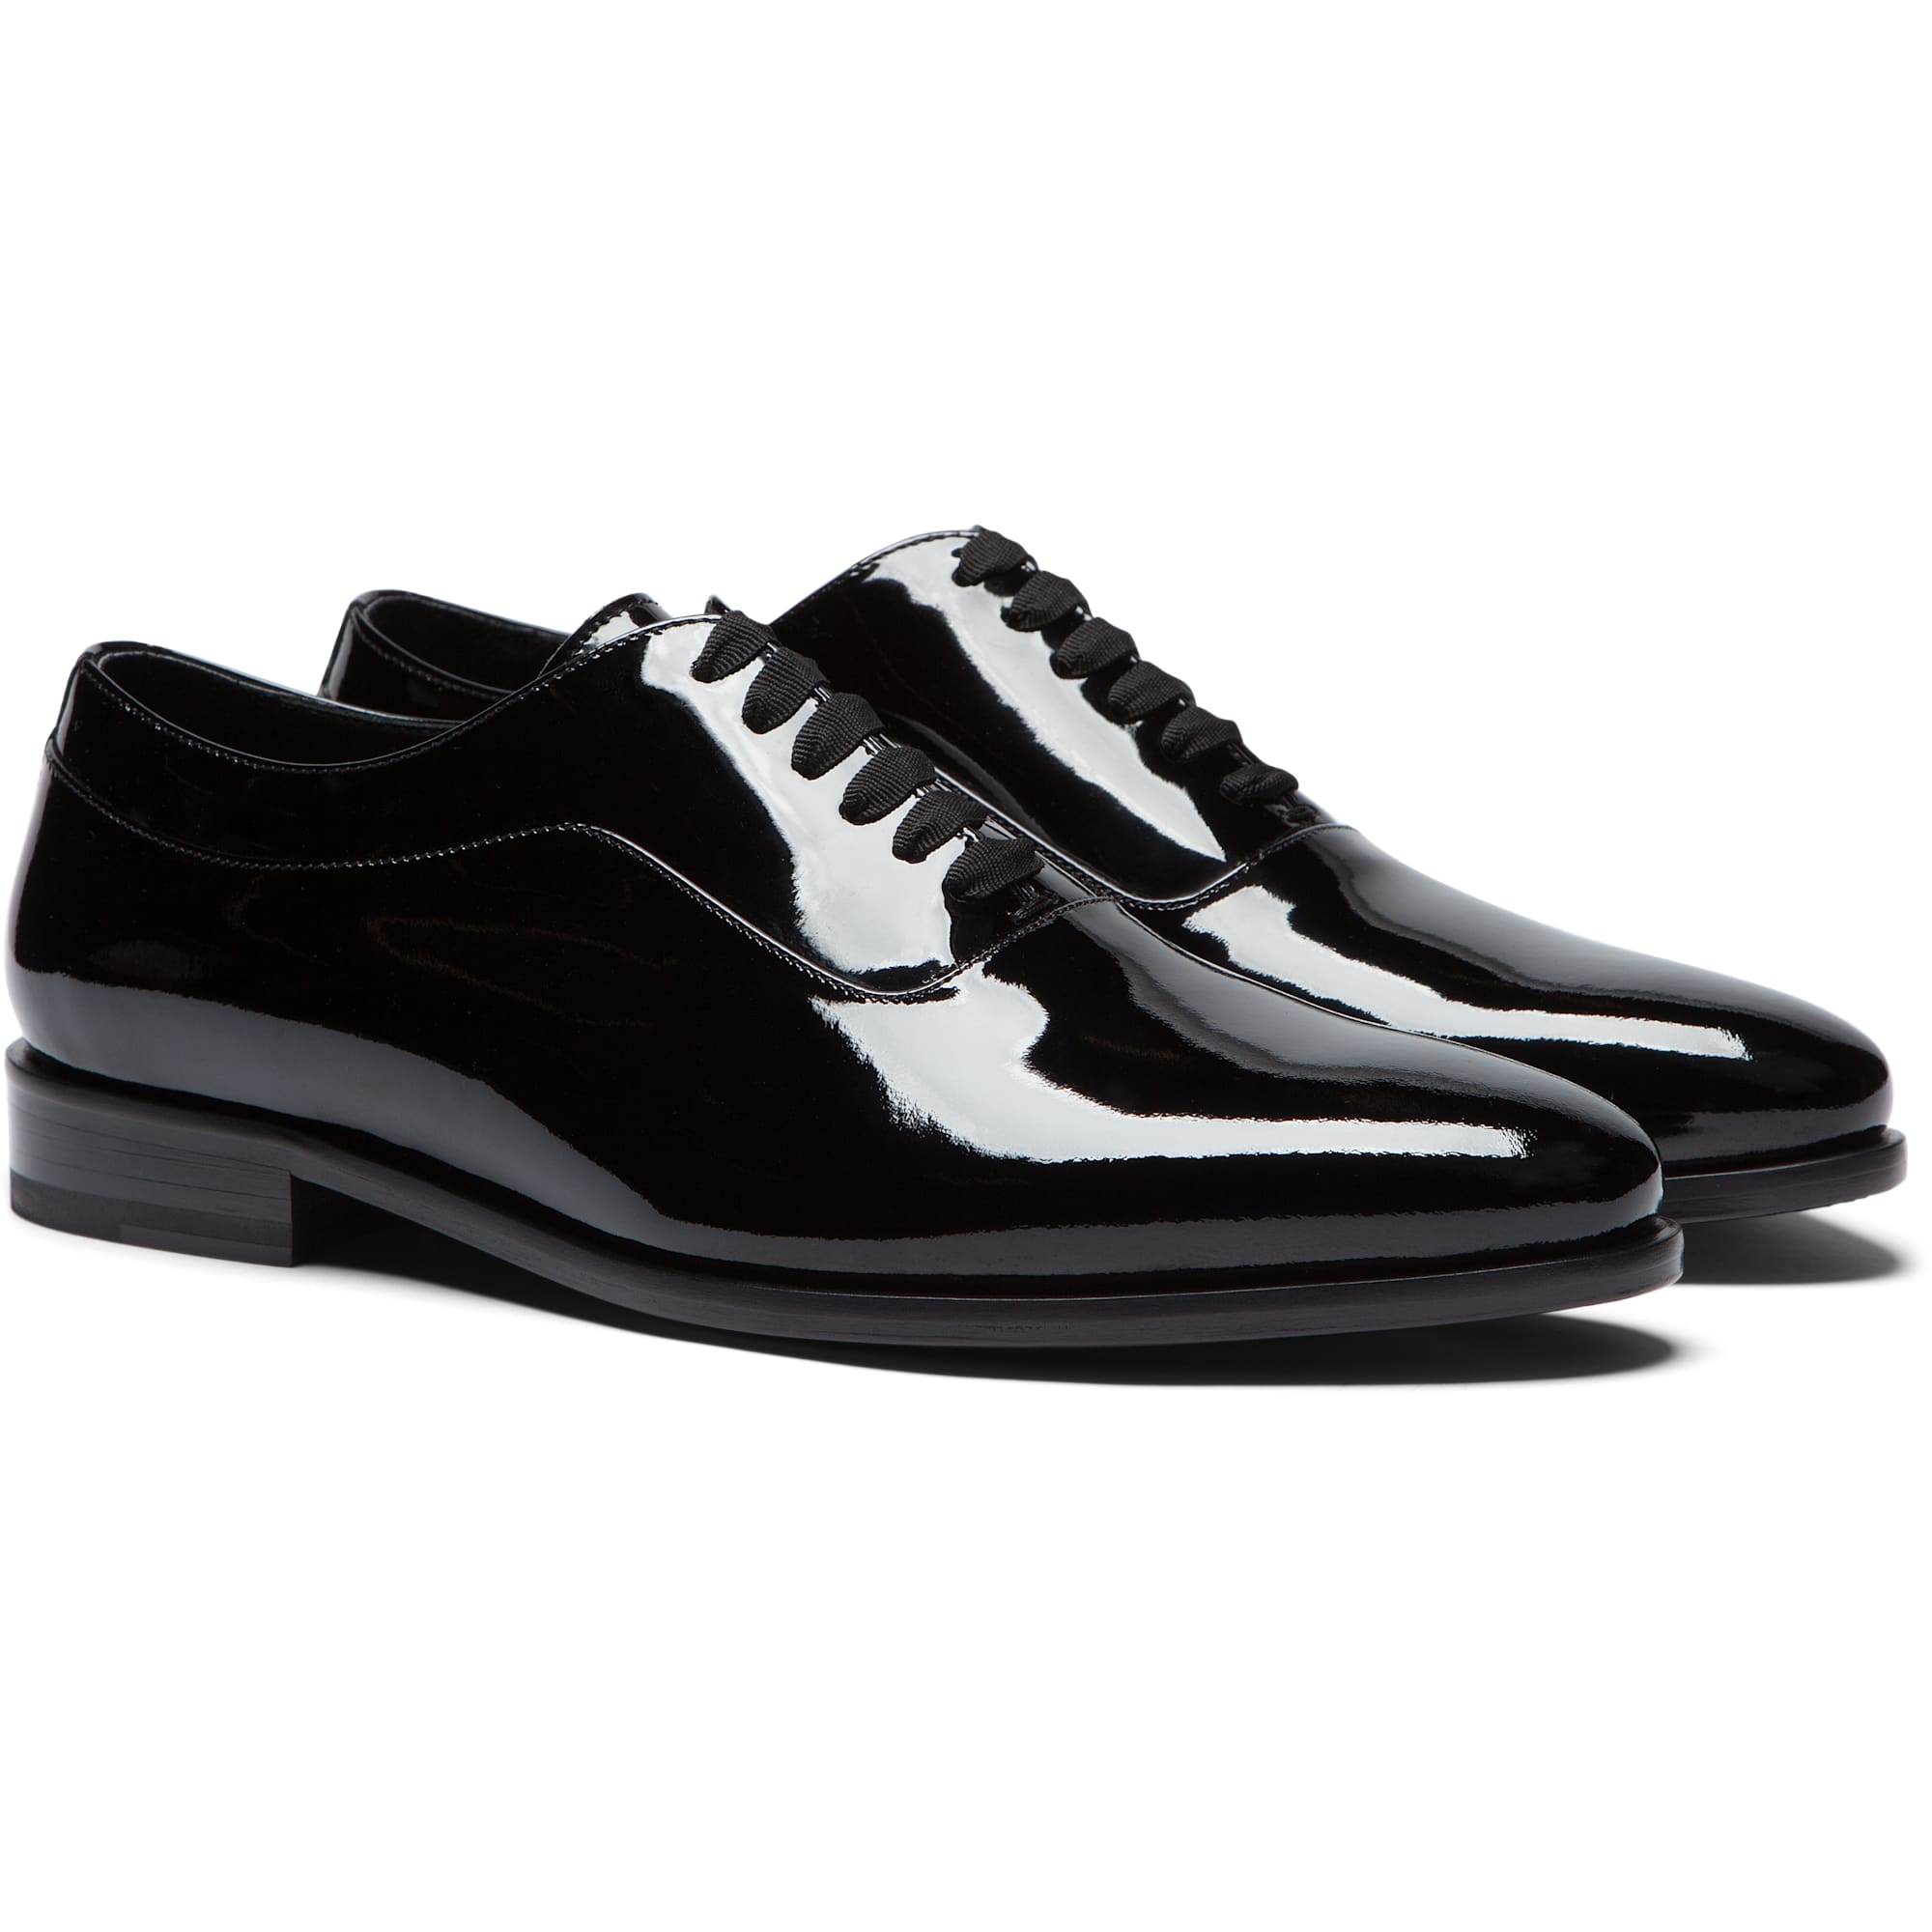 A Suitsupply black shoe